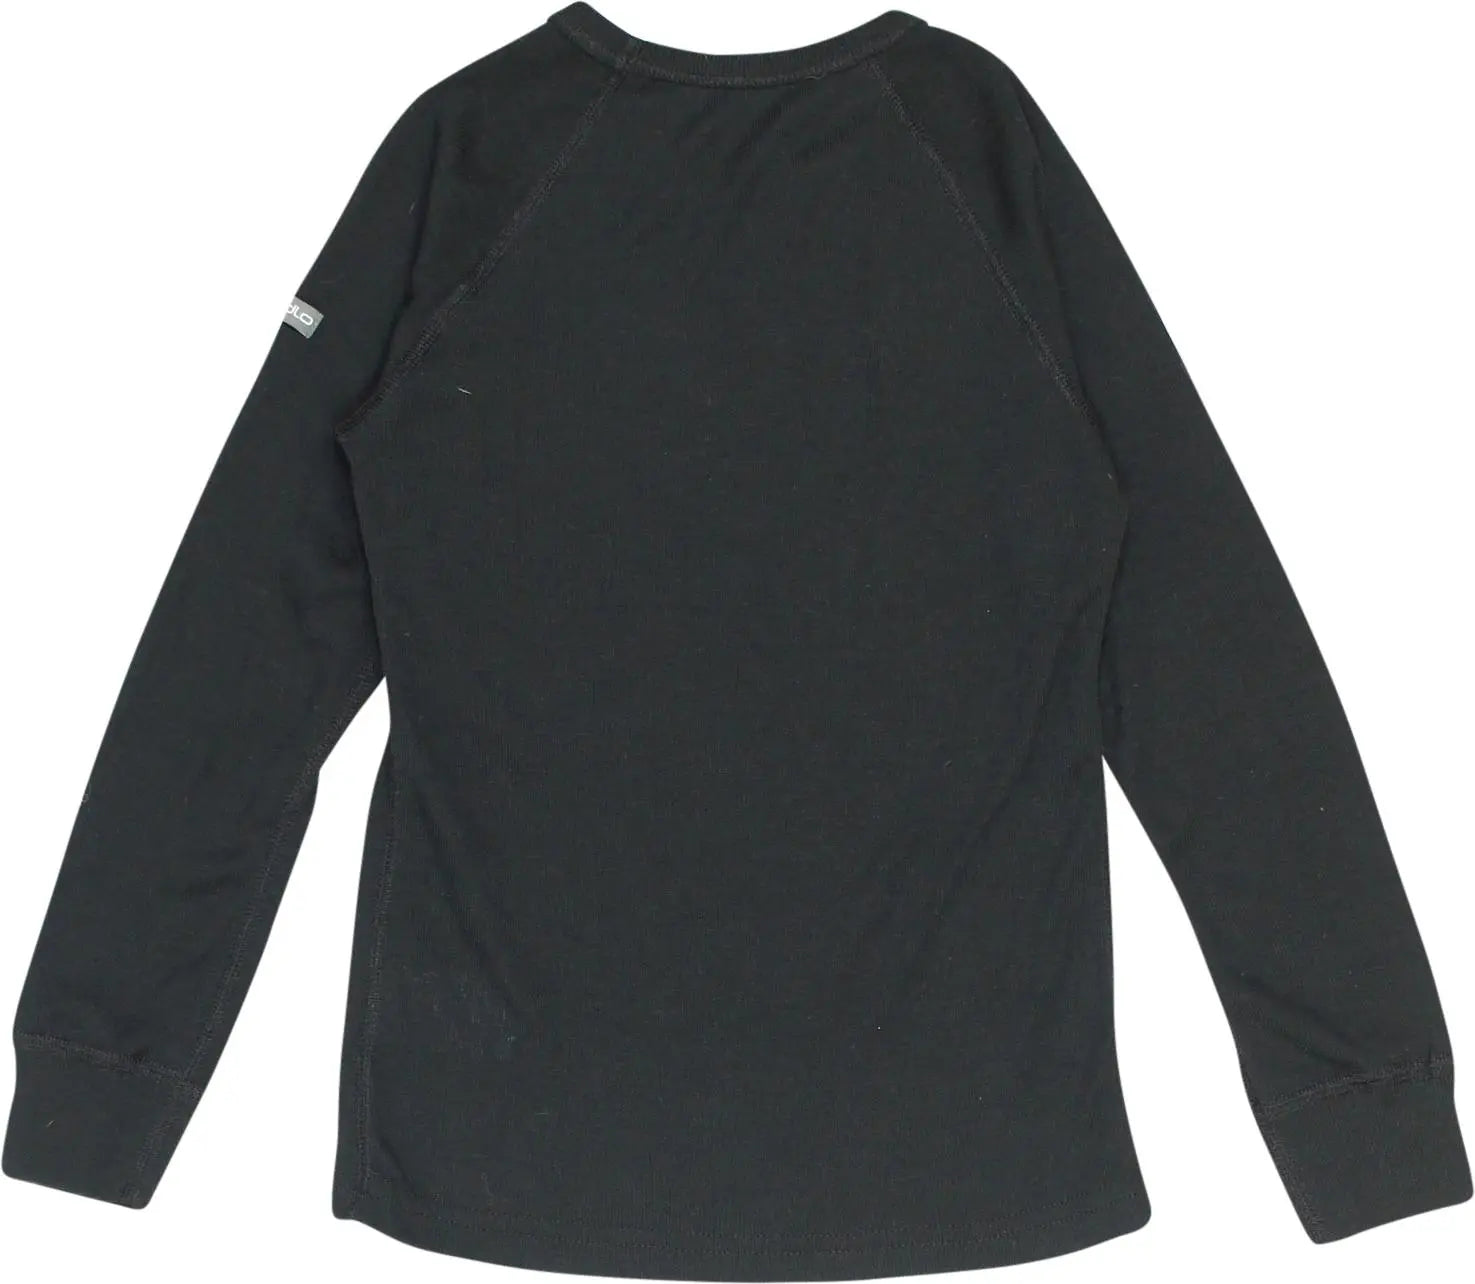 Odlo - Black Long Sleeve Shirt- ThriftTale.com - Vintage and second handclothing